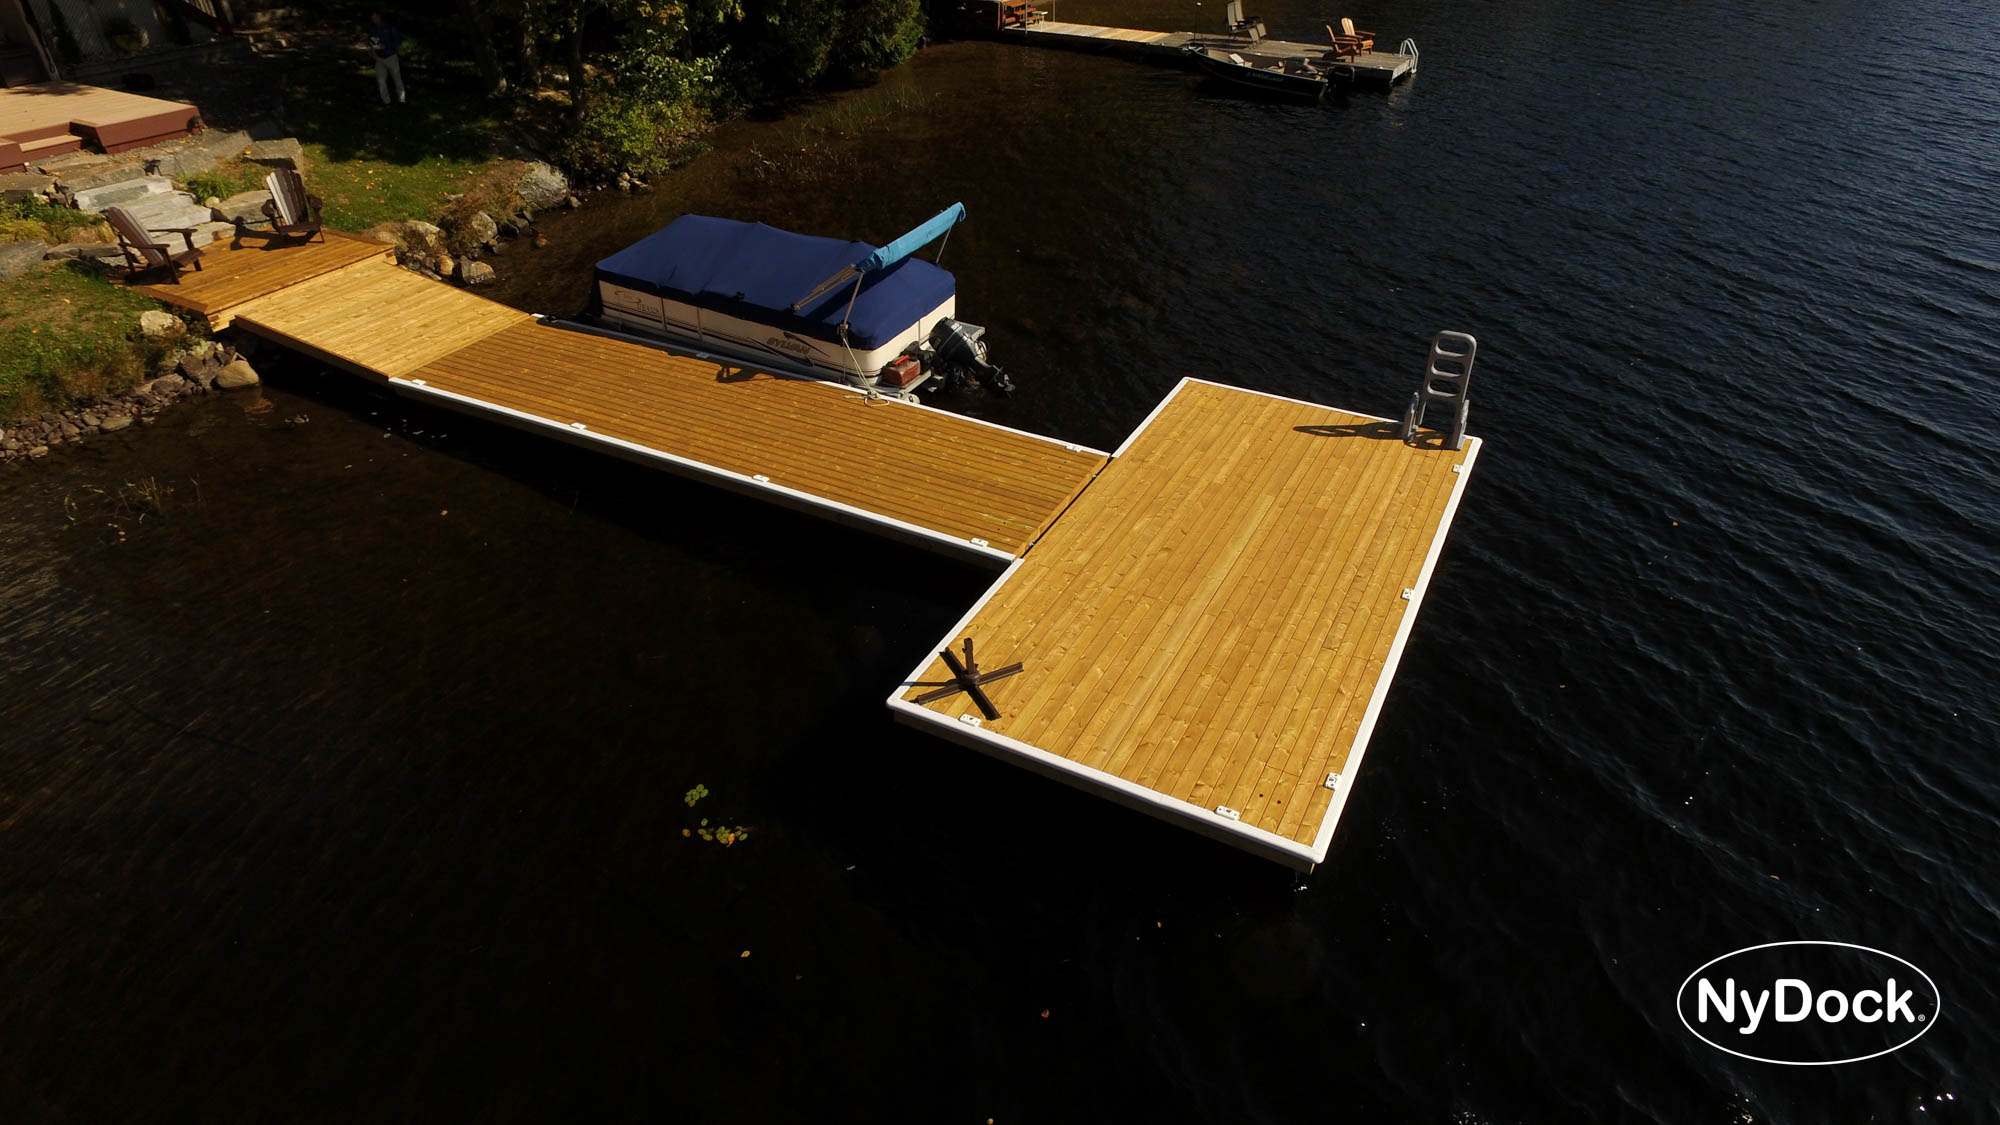 NyDock's Big T floating dock configuration